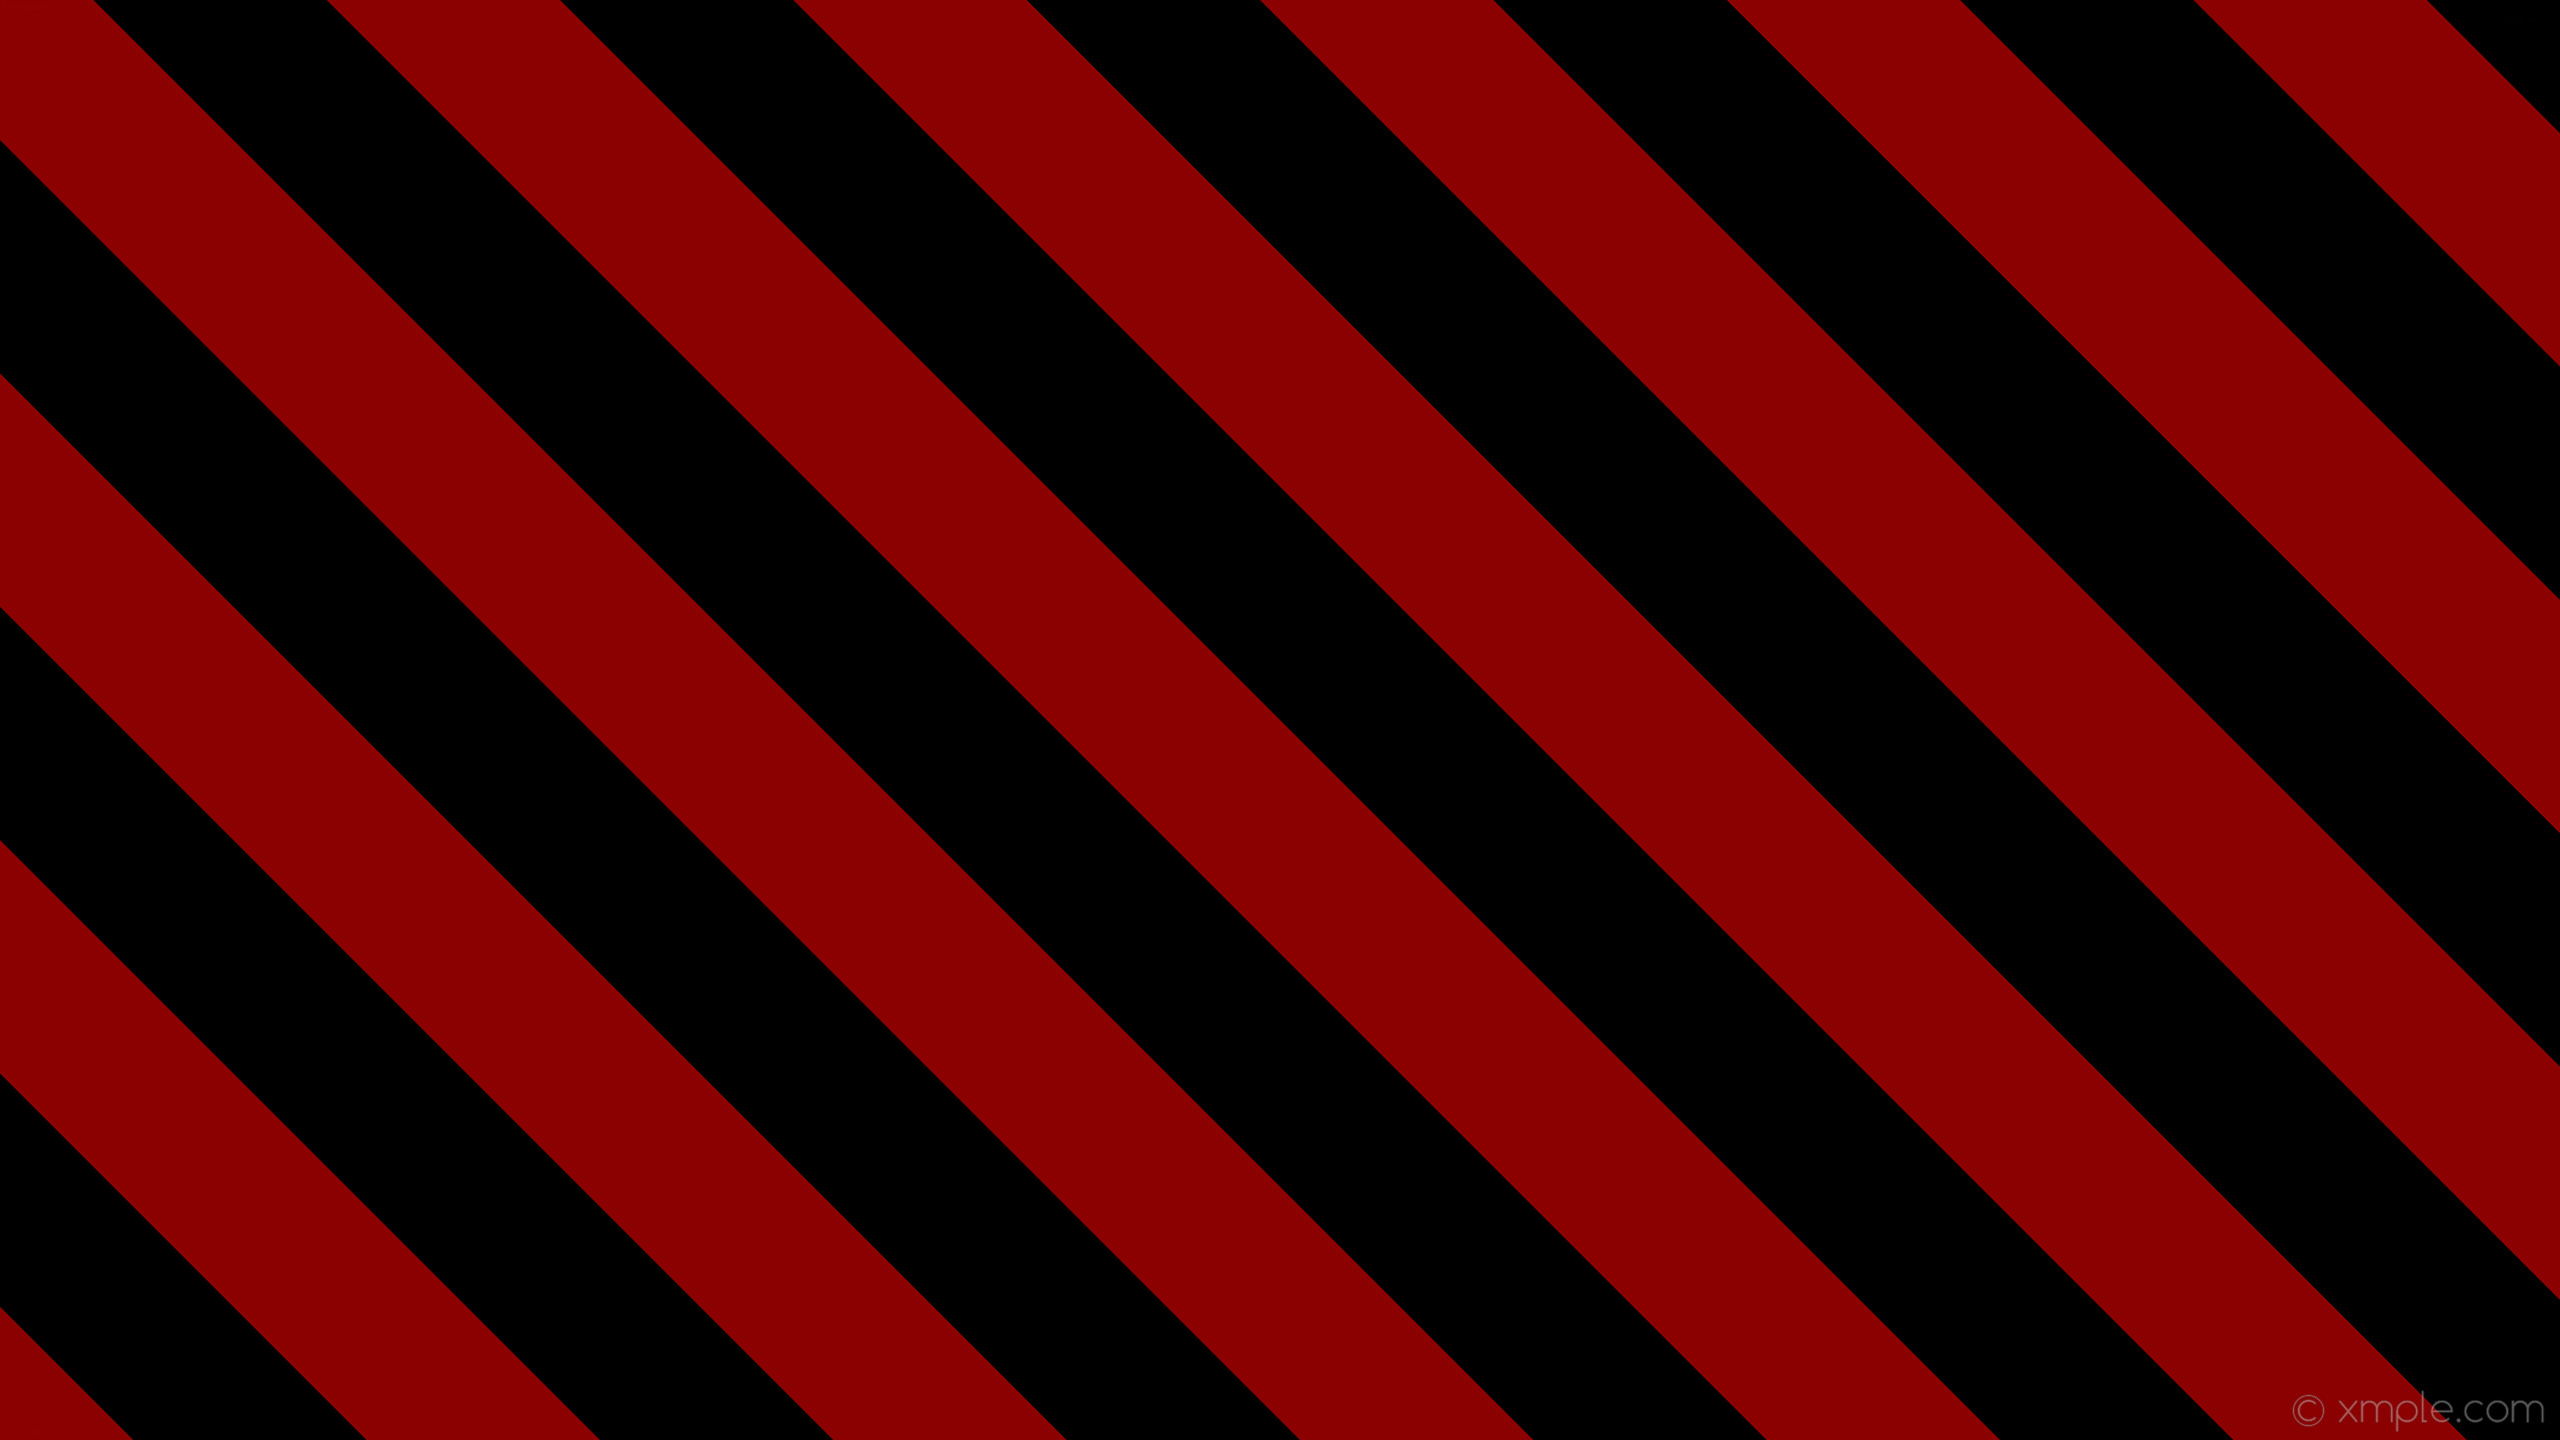 2560x1440 wallpaper stripes red lines black streaks dark red #8b0000 #000000 diagonal  315Â° 165px